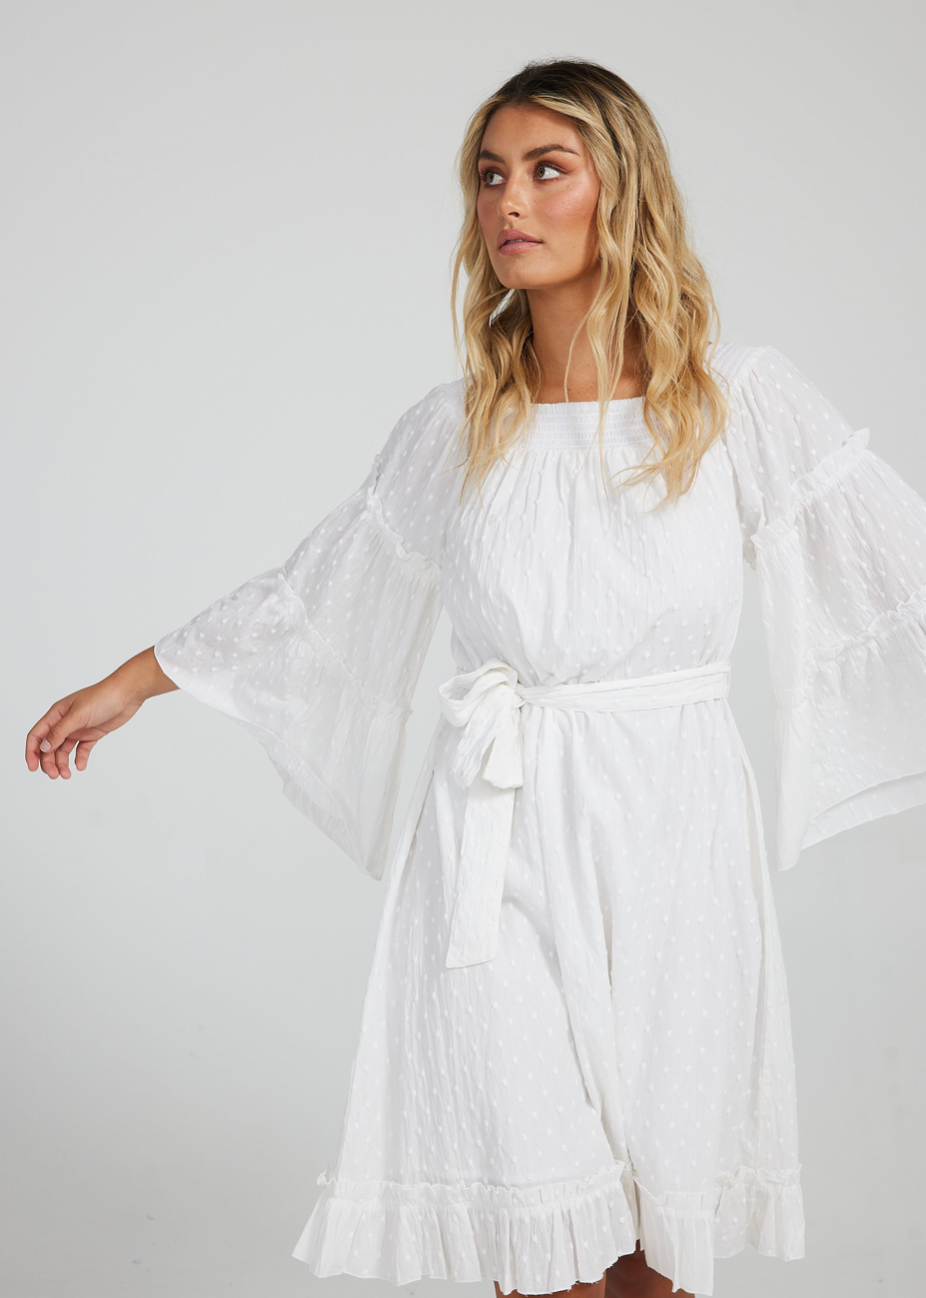 Mantra Dress - White - Daisy Grace Lifestyle